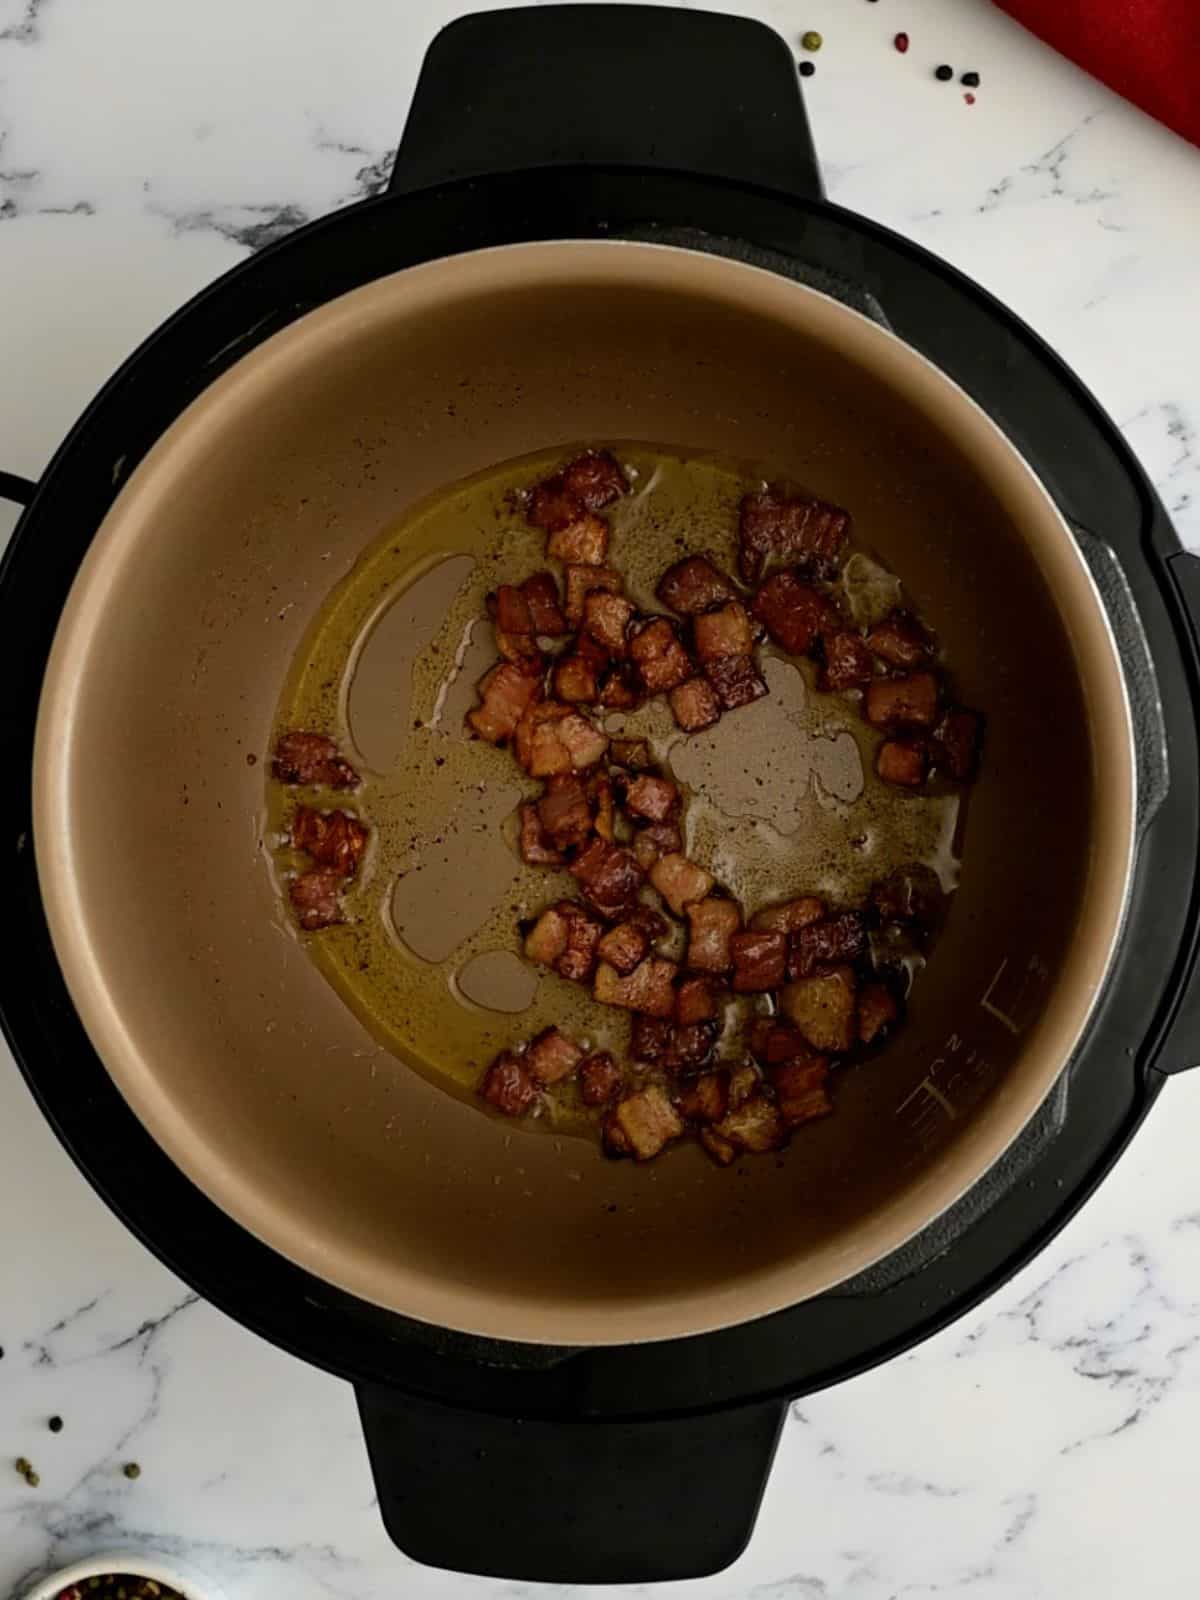 Sauteed bacon inside inner pot to start Beef Bourguignon.